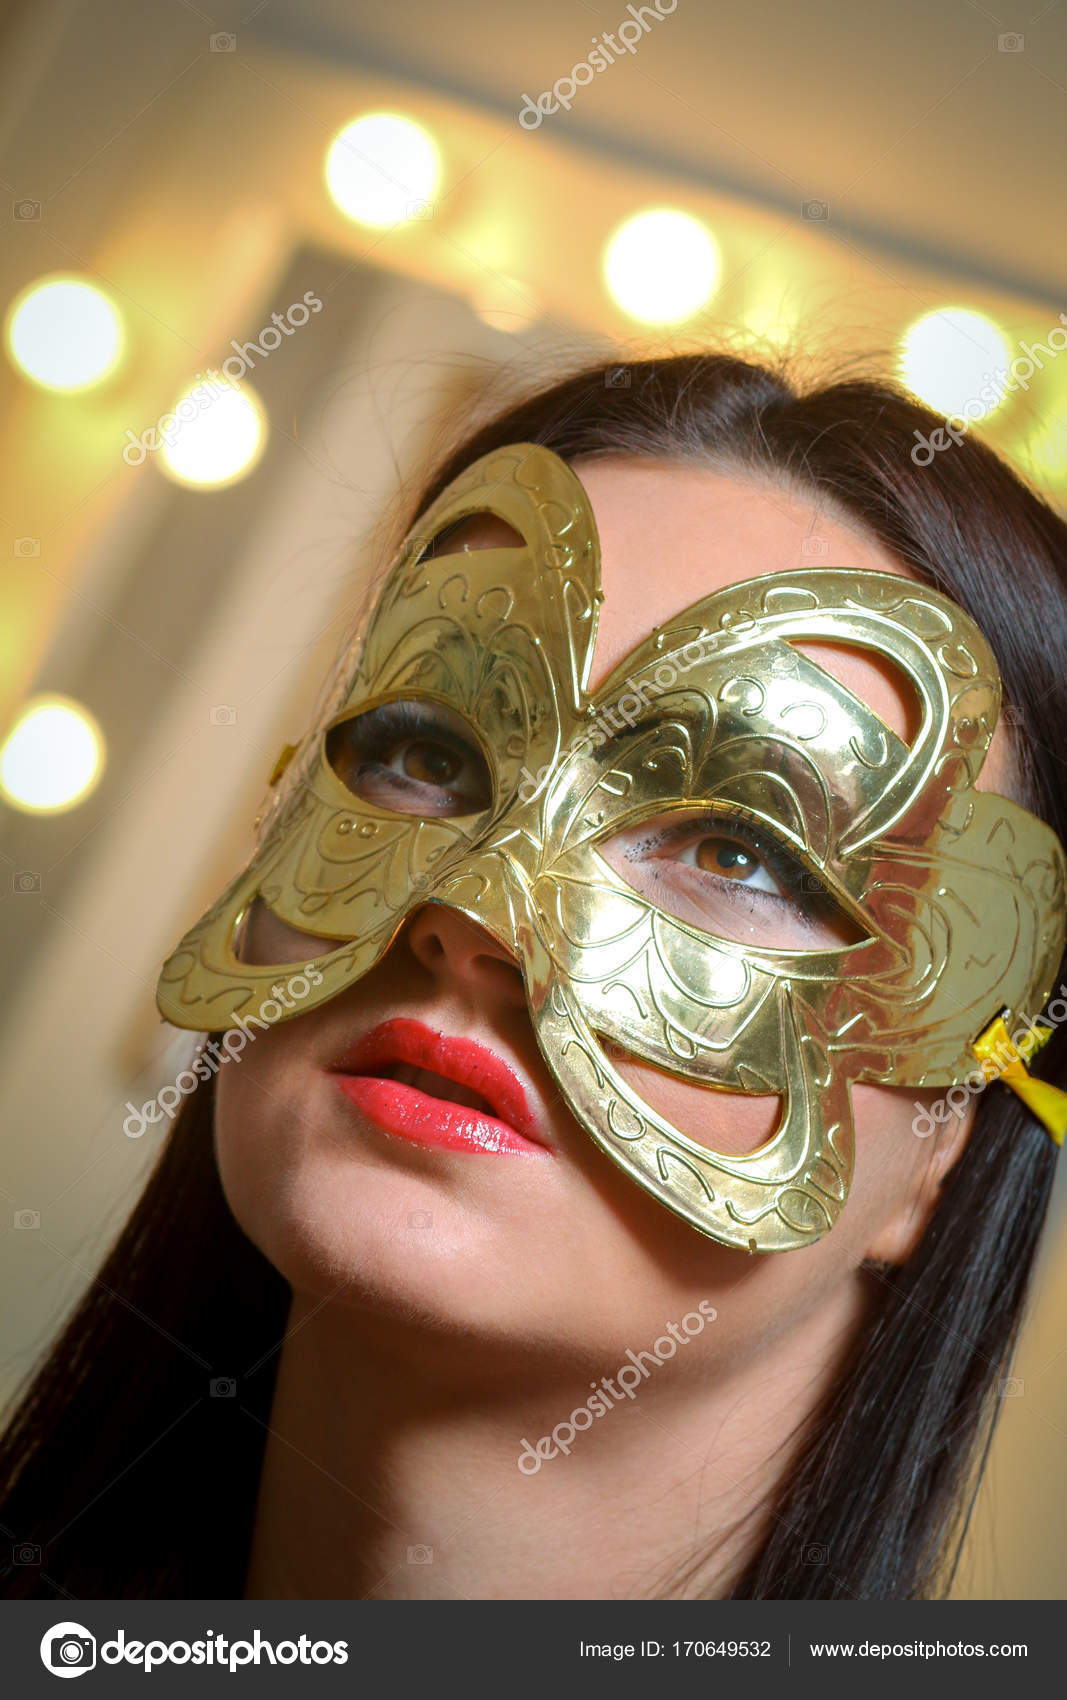 depositphotos_170649532-stock-photo-beauty-model-woman-wearing-masquerade.jpg